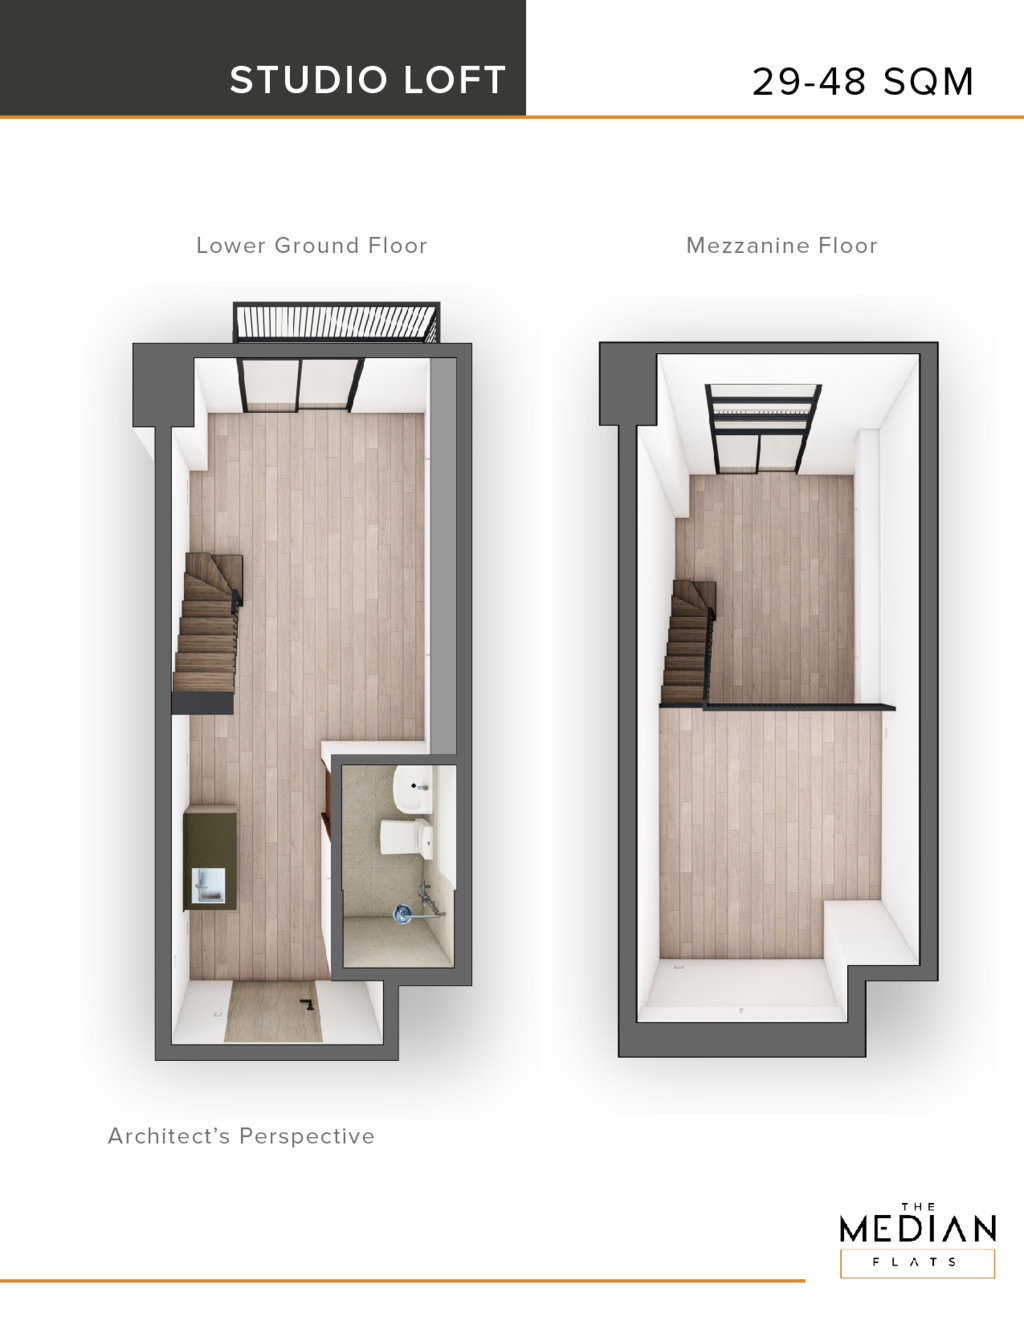 median flats loft